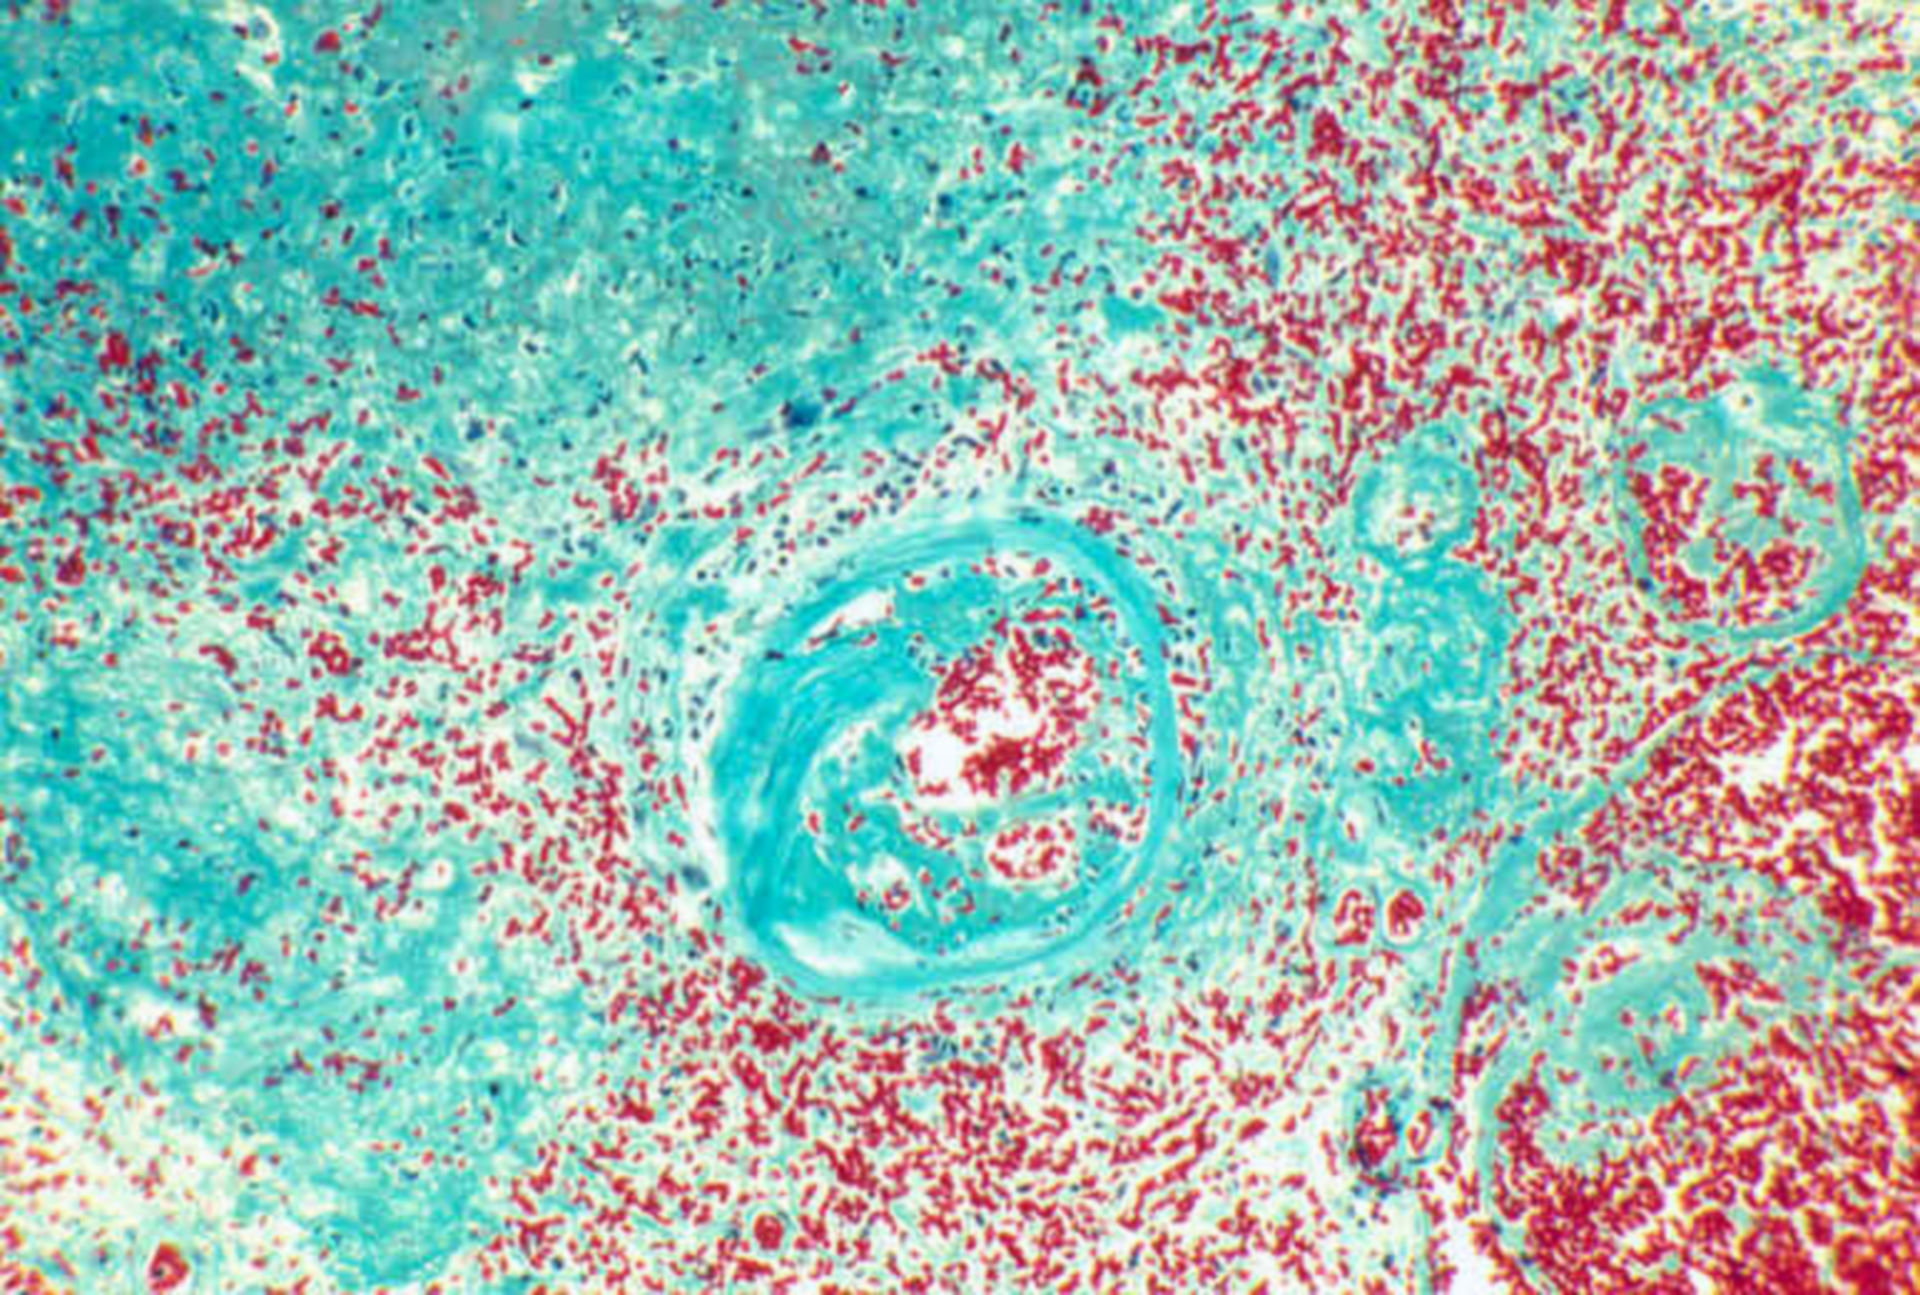 Haemorrhages, microscopic view